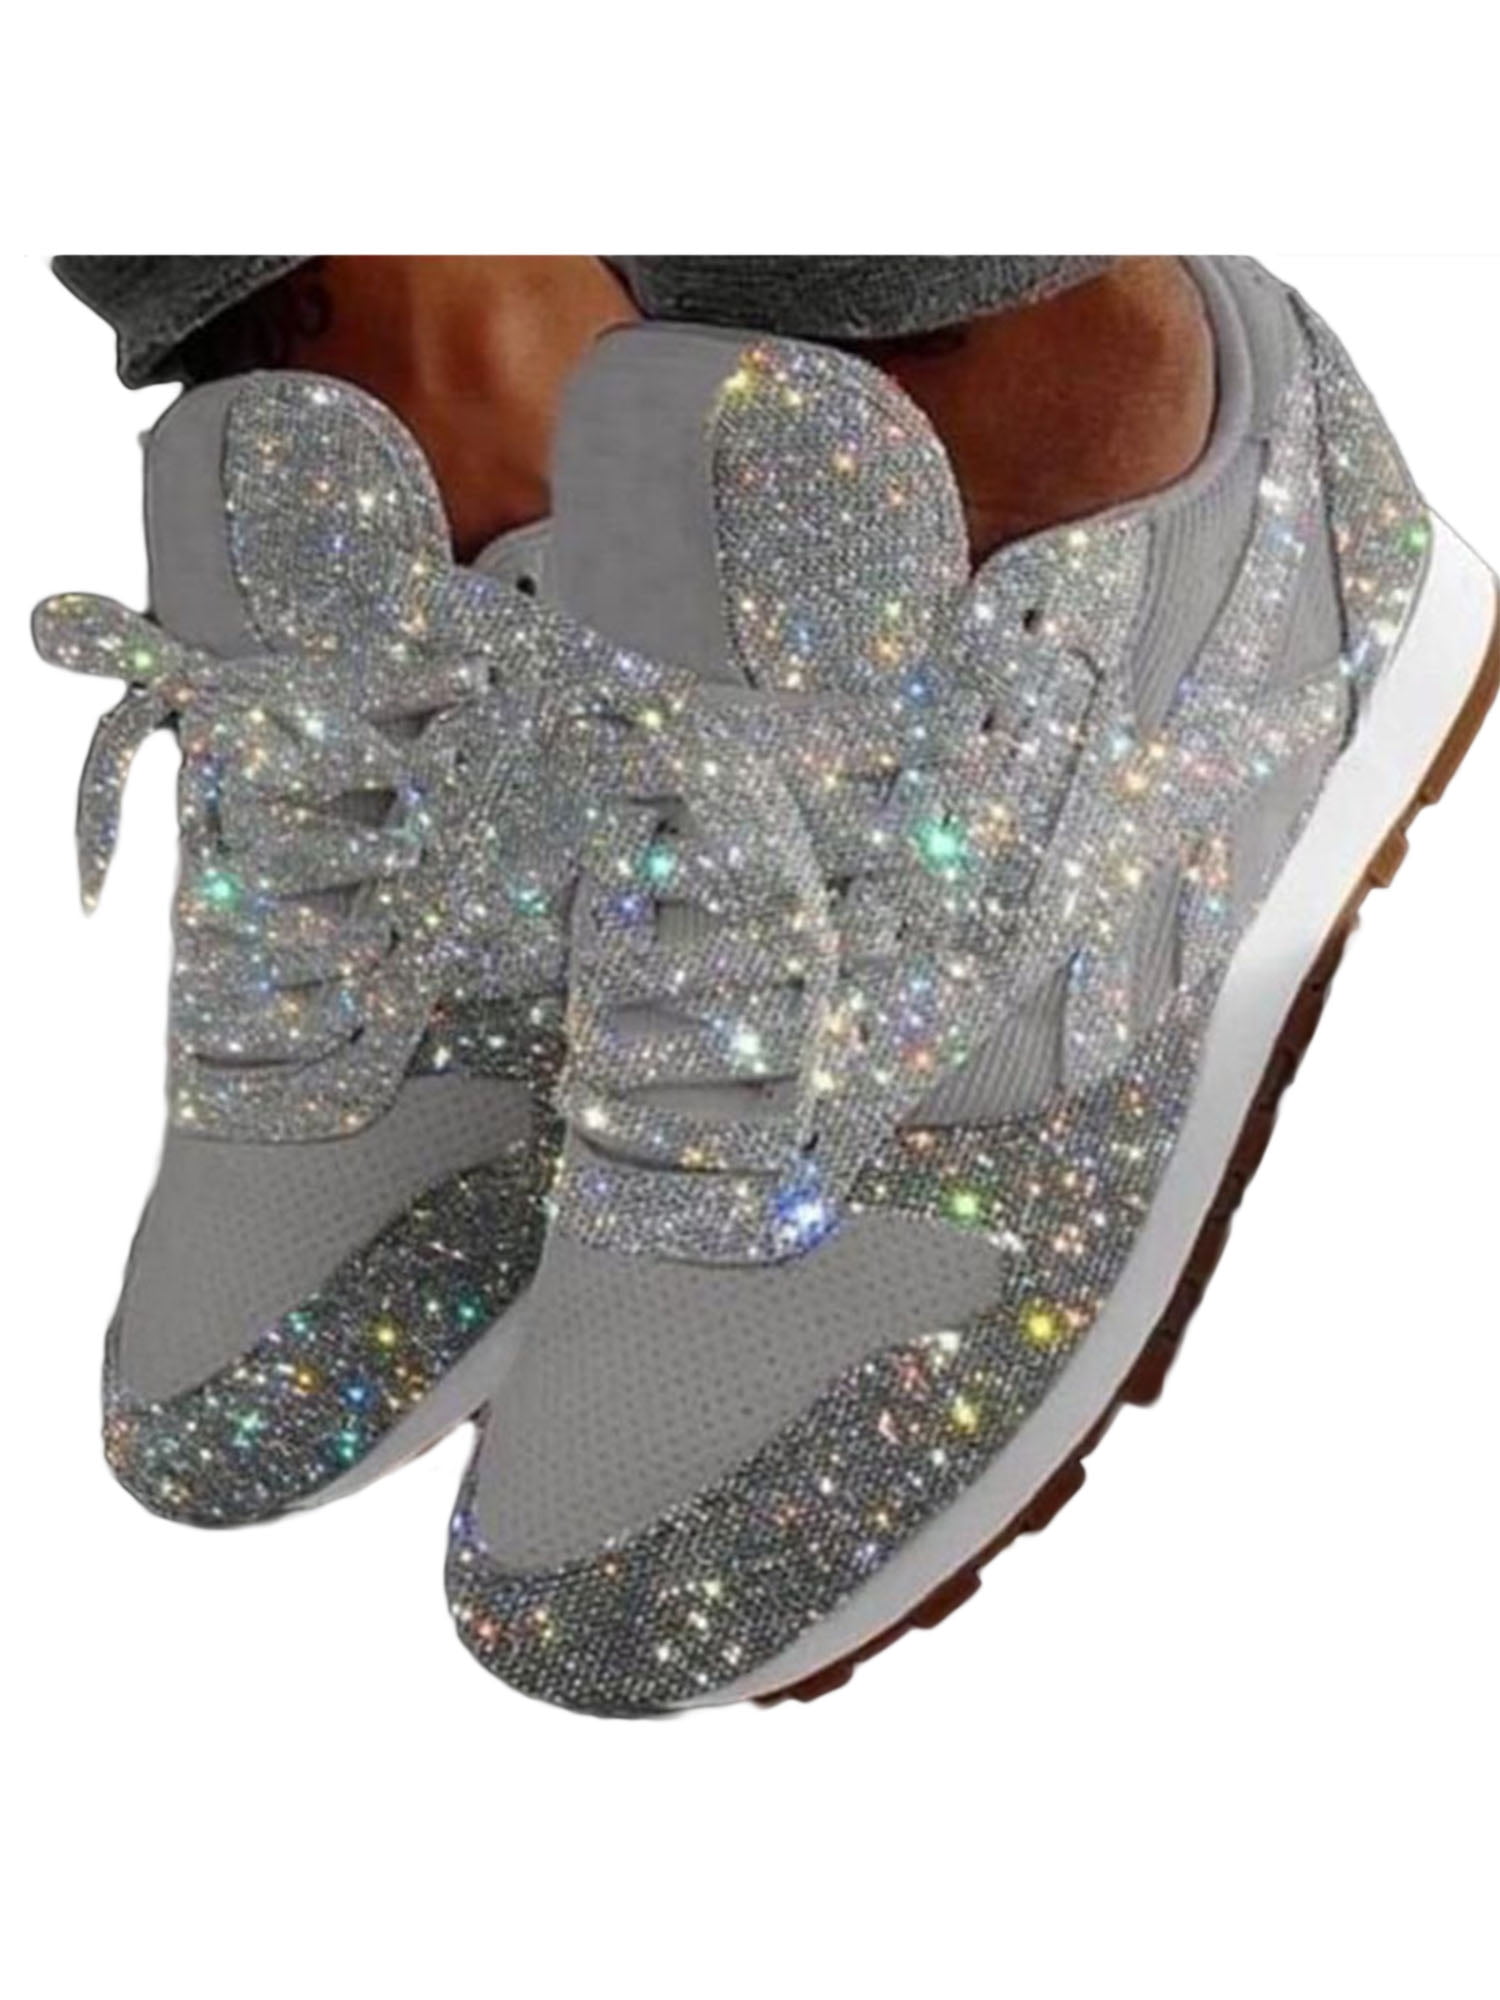 Superga Lace-Up Sneaker silver-colored-black casual look Shoes Sneakers Lace-Up Sneakers 